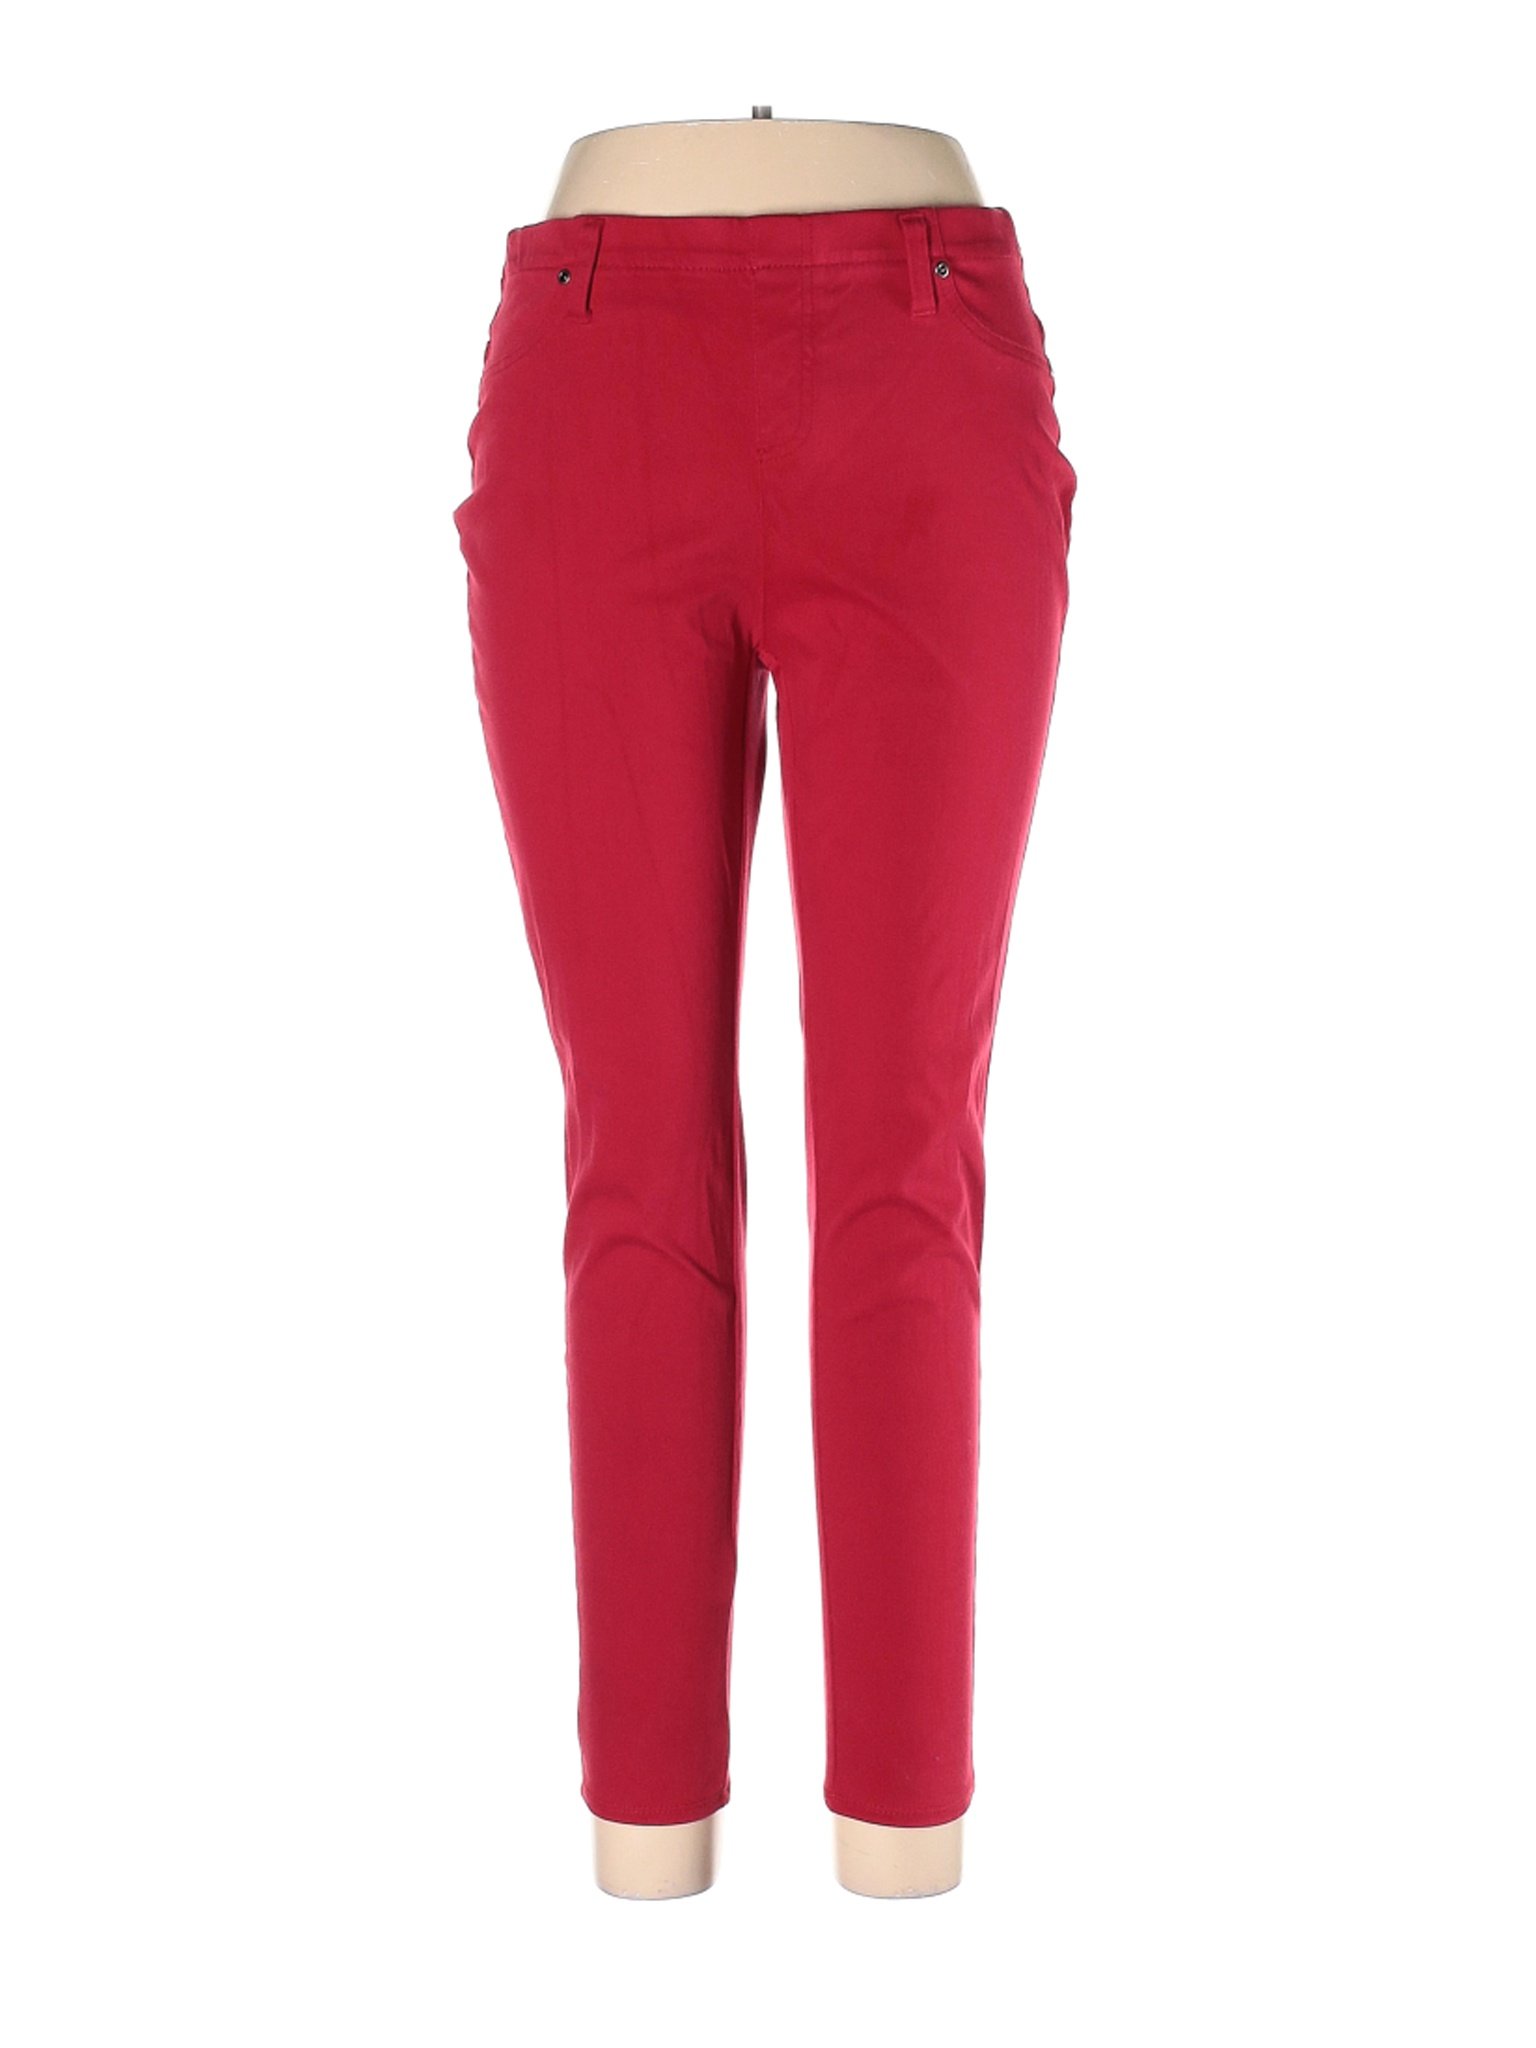 Faded Glory Women Red Casual Pants 1X Plus | eBay